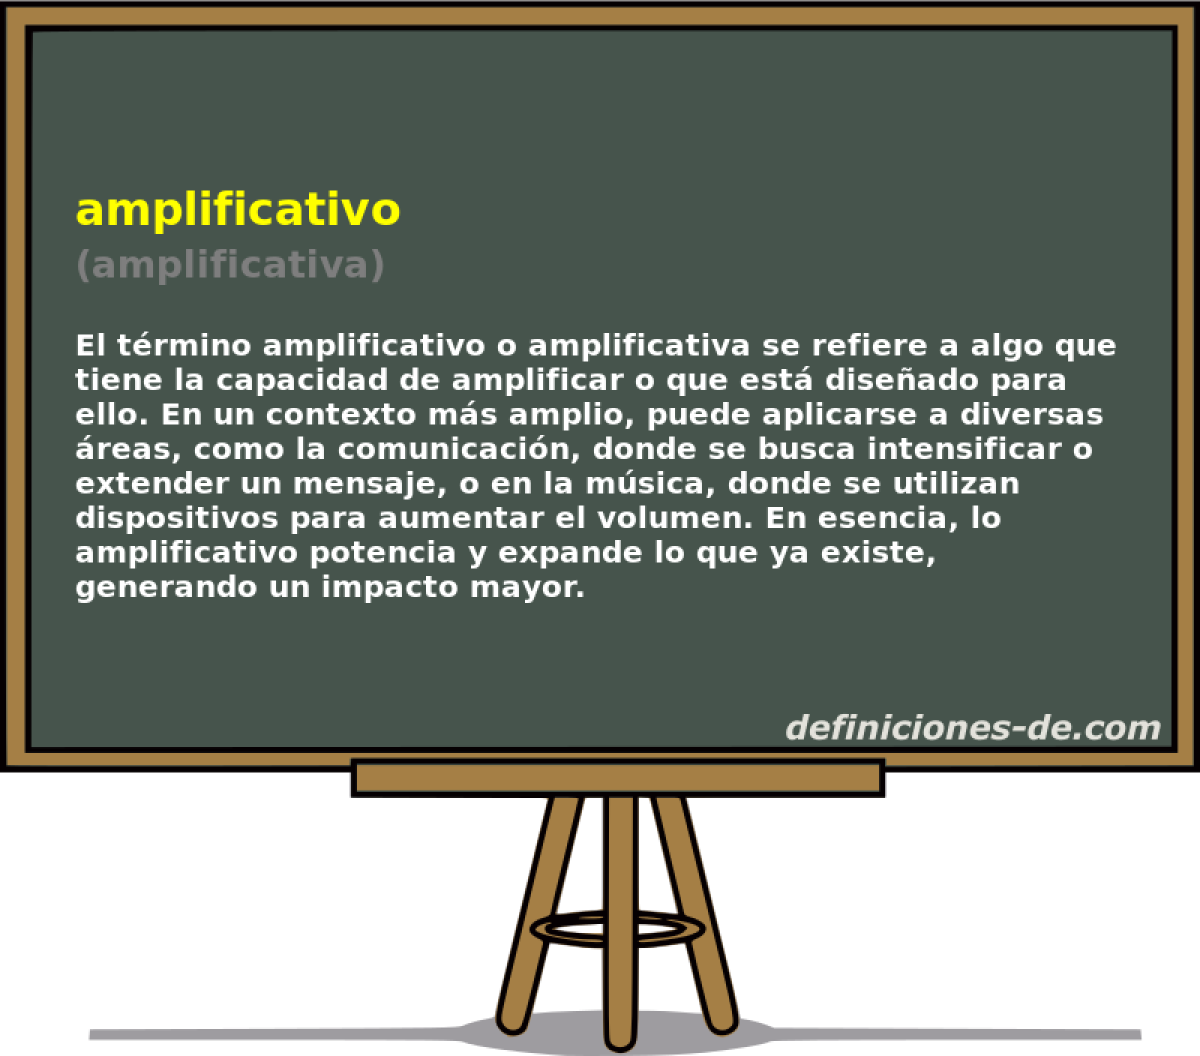 amplificativo (amplificativa)